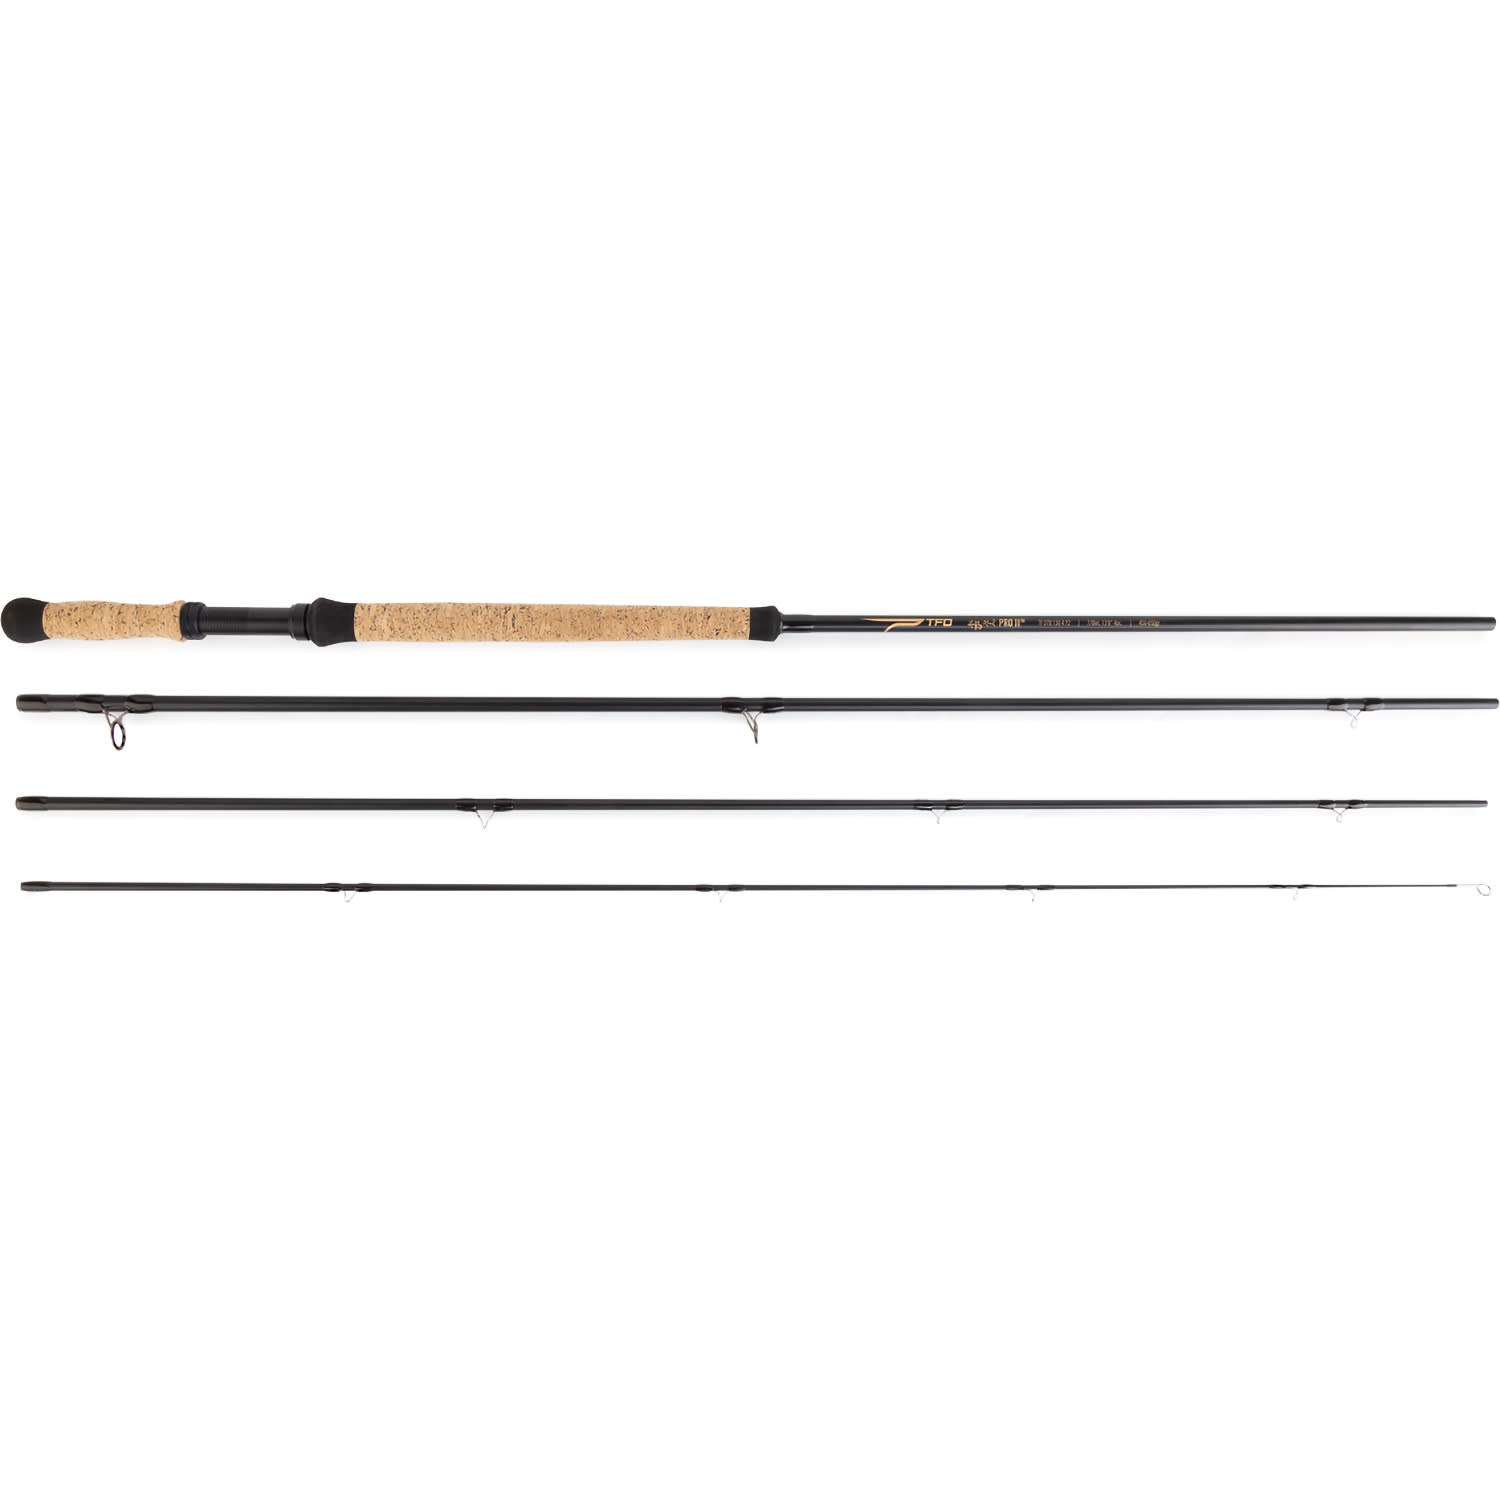 TFO Axiom 2-X Fly Rod w/case - New Series - Wilkinson Fly Fishing LLC